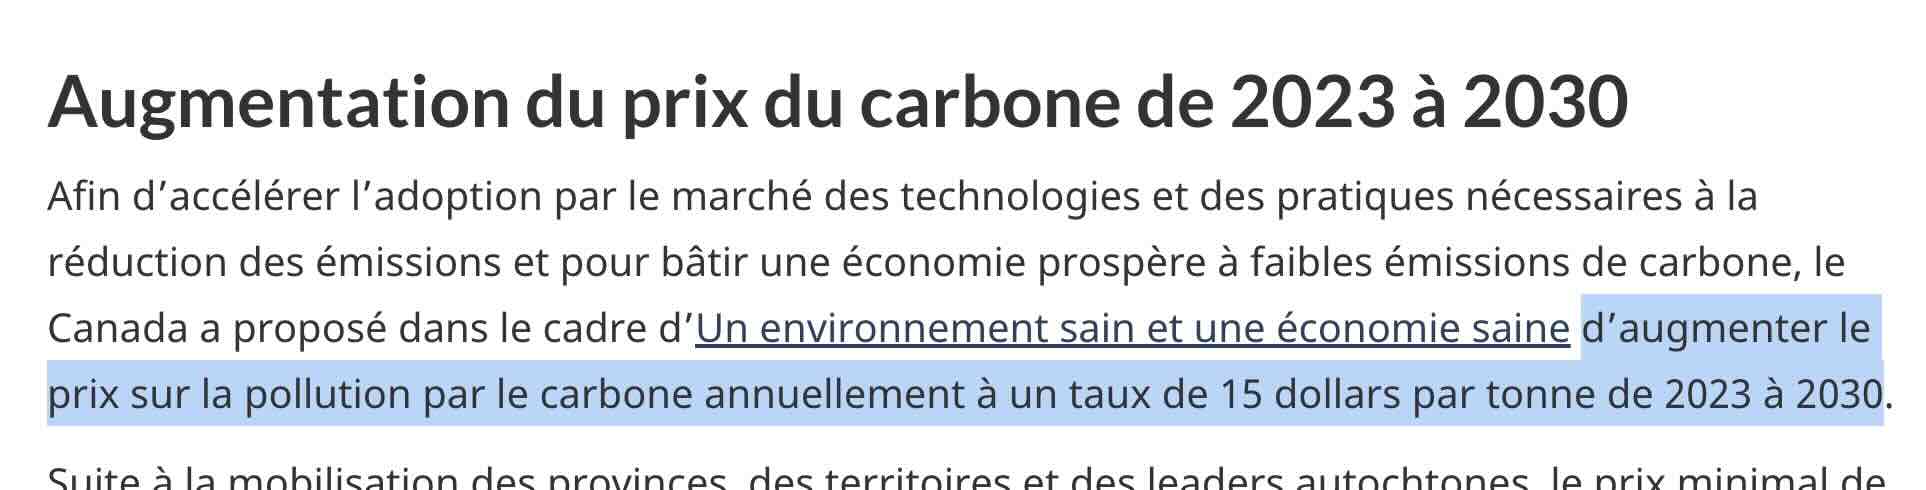 https://www.canada.ca/fr/environnement-changement-climatique/services/changements-climatiques/fonctionnement-tarification-pollution/tarification-pollution-carbone-modele-federal-information.html